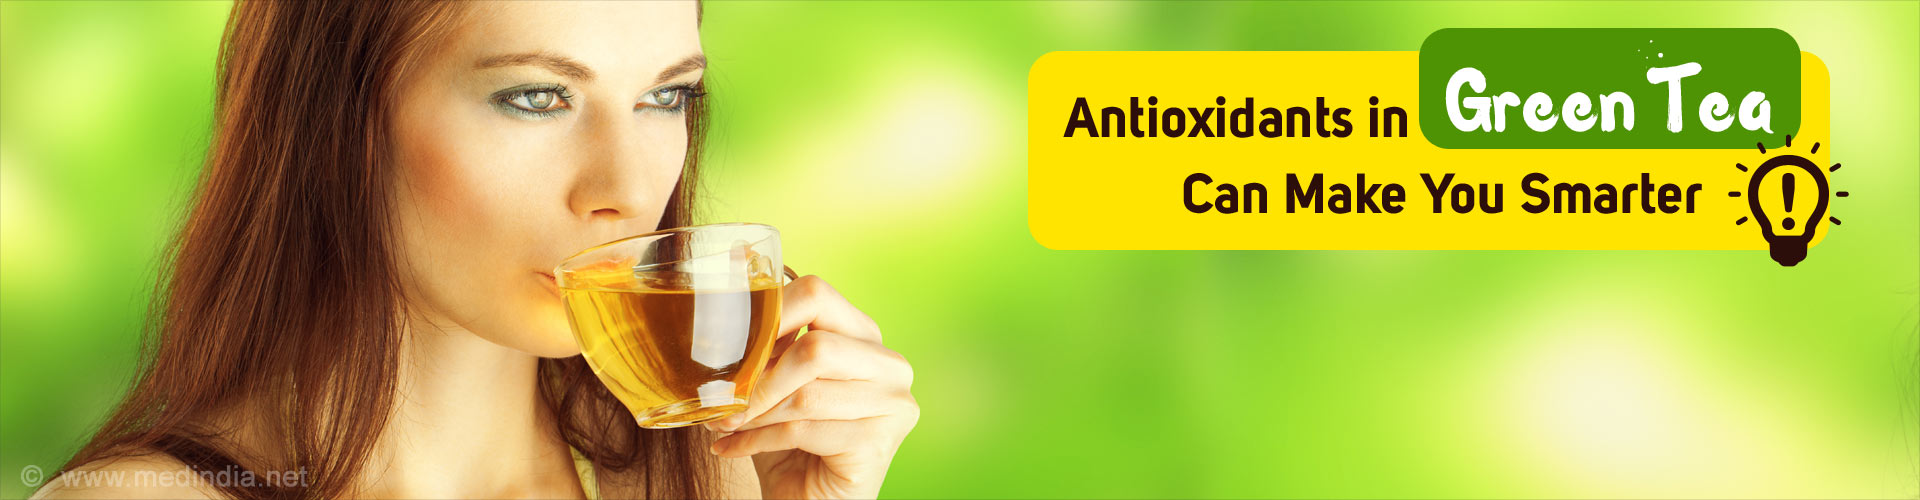 Antioxidants in green tea can make you smarter